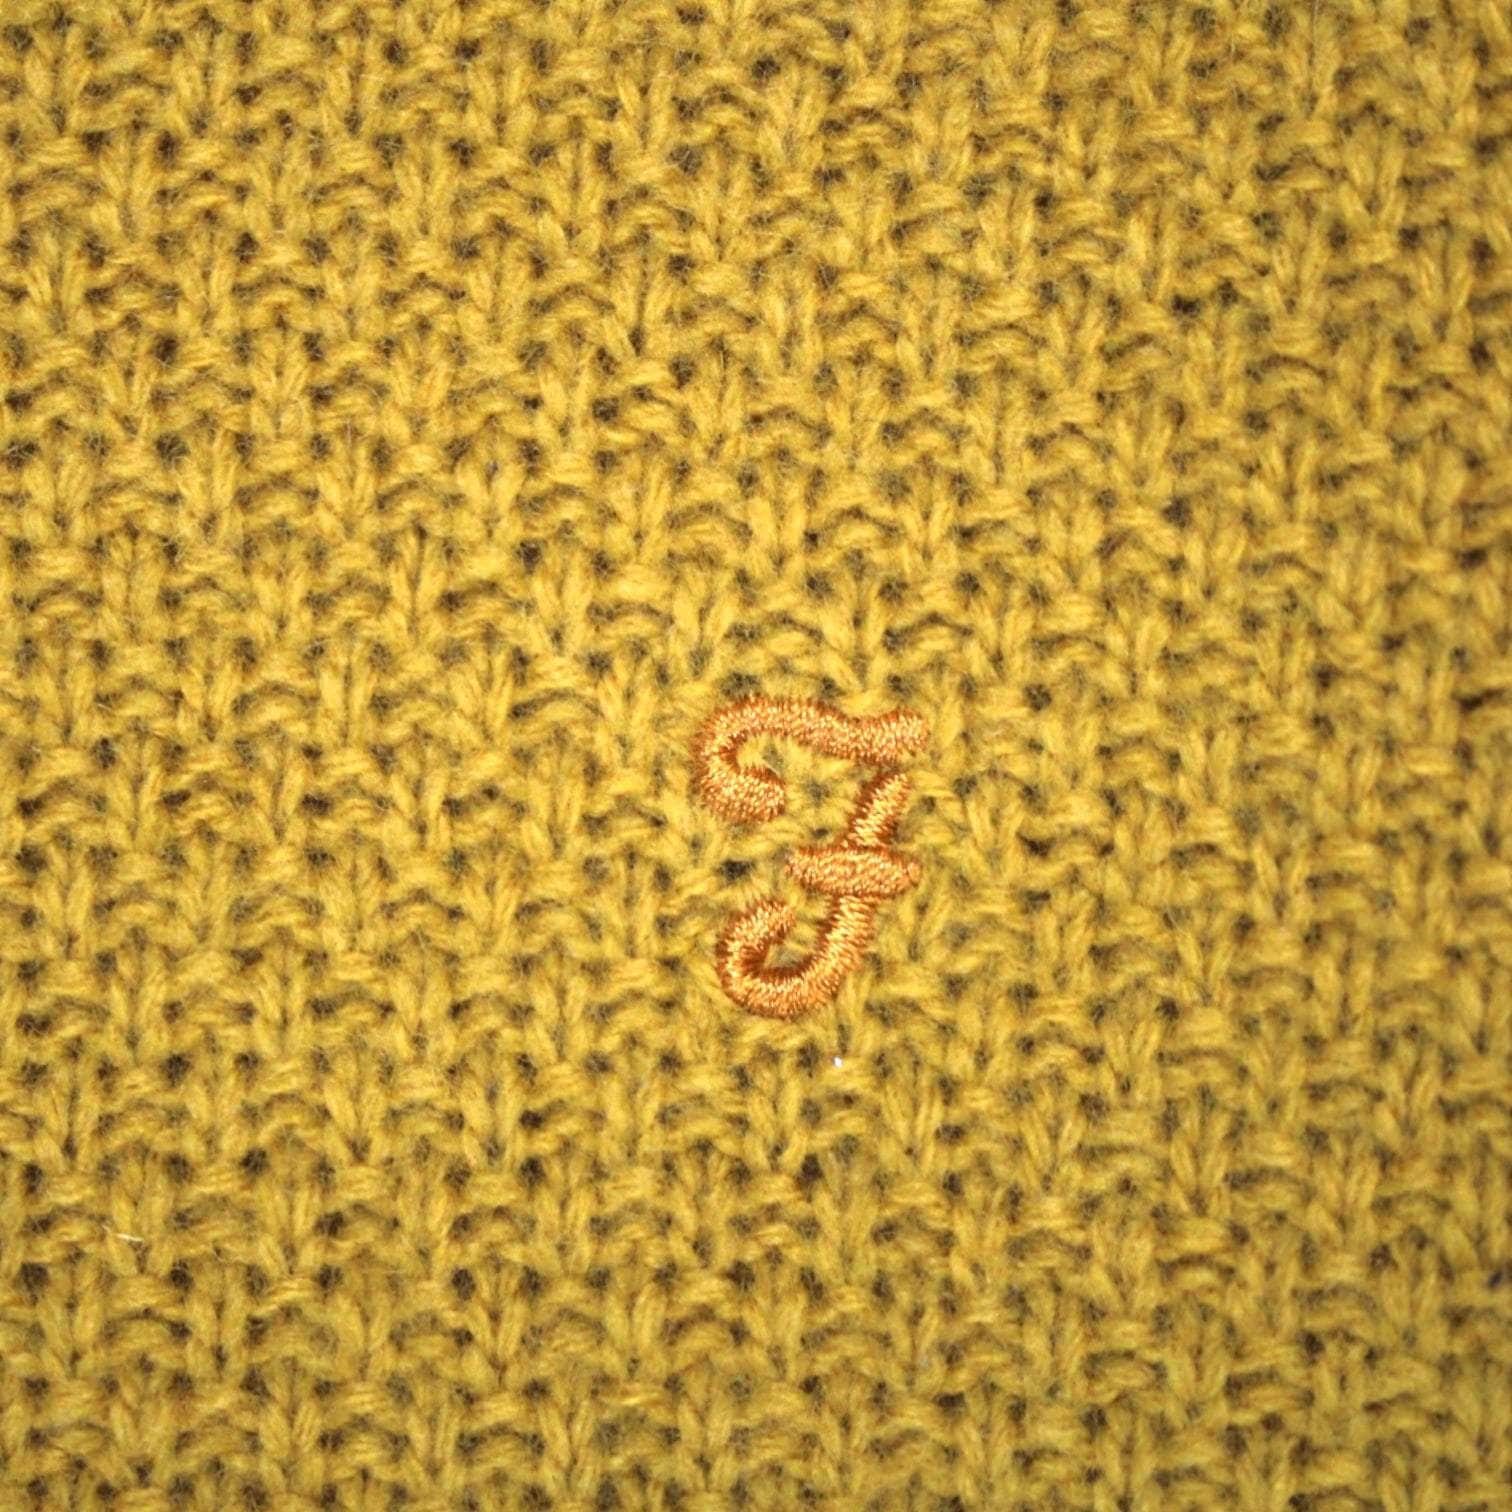 Farah Yellow Knitted Wool Jumper